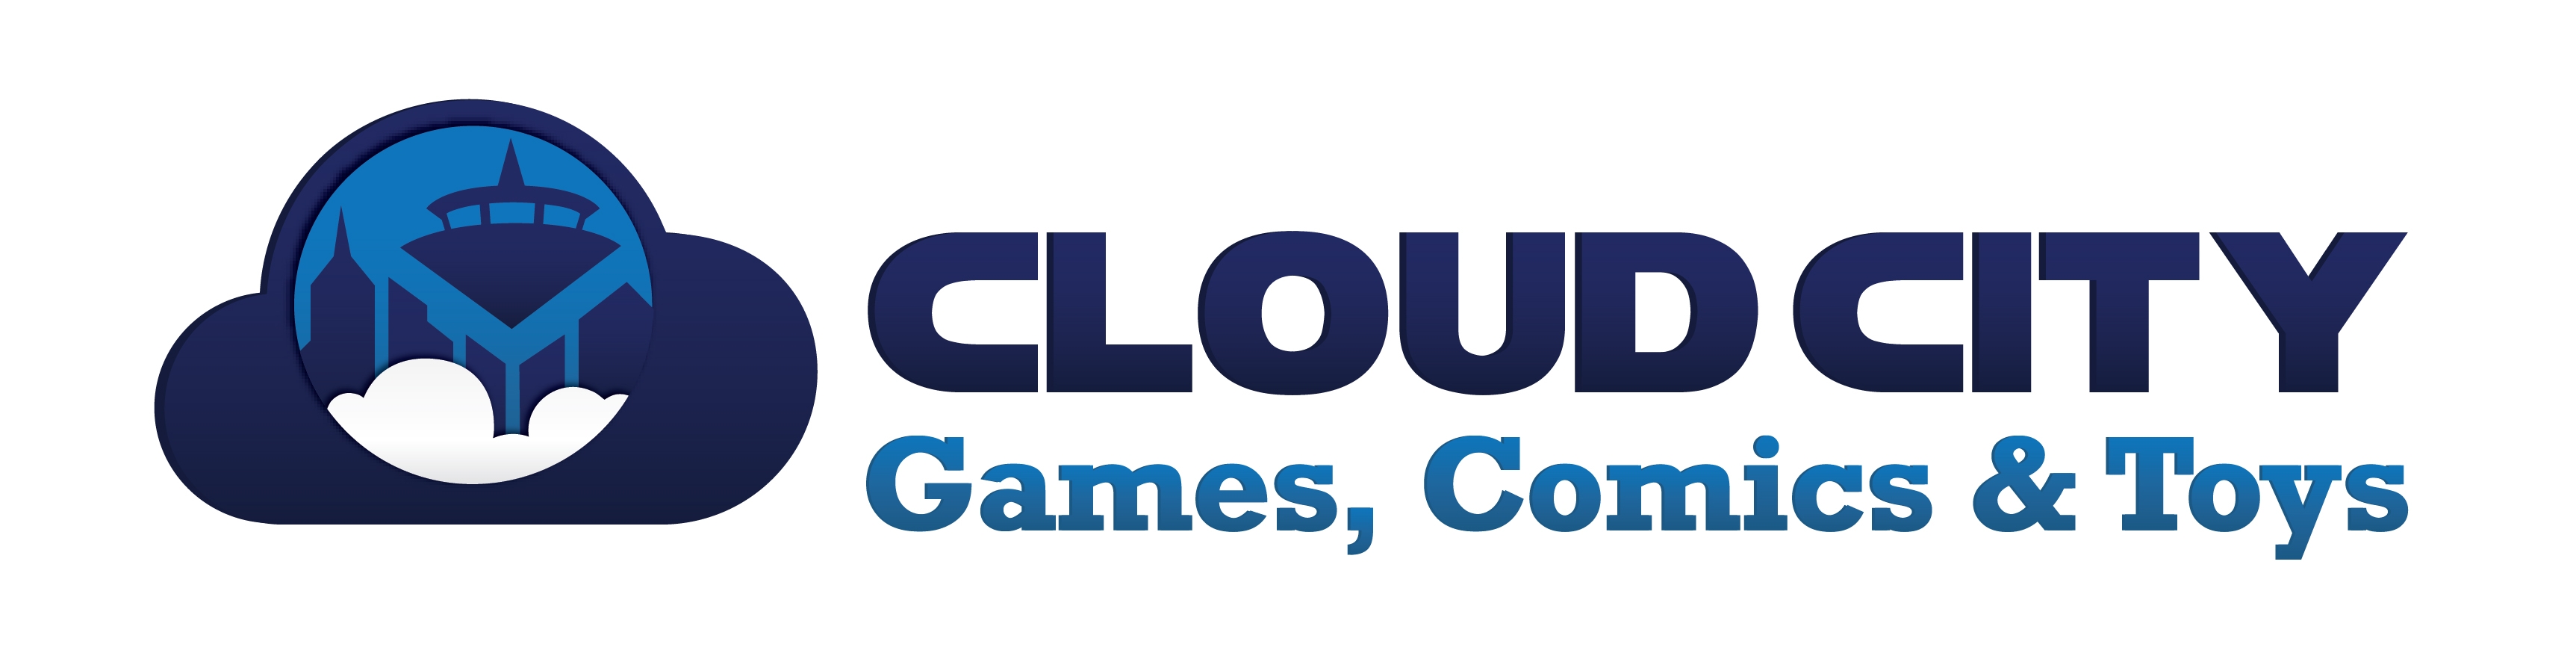 cloud city games comics and toys logo